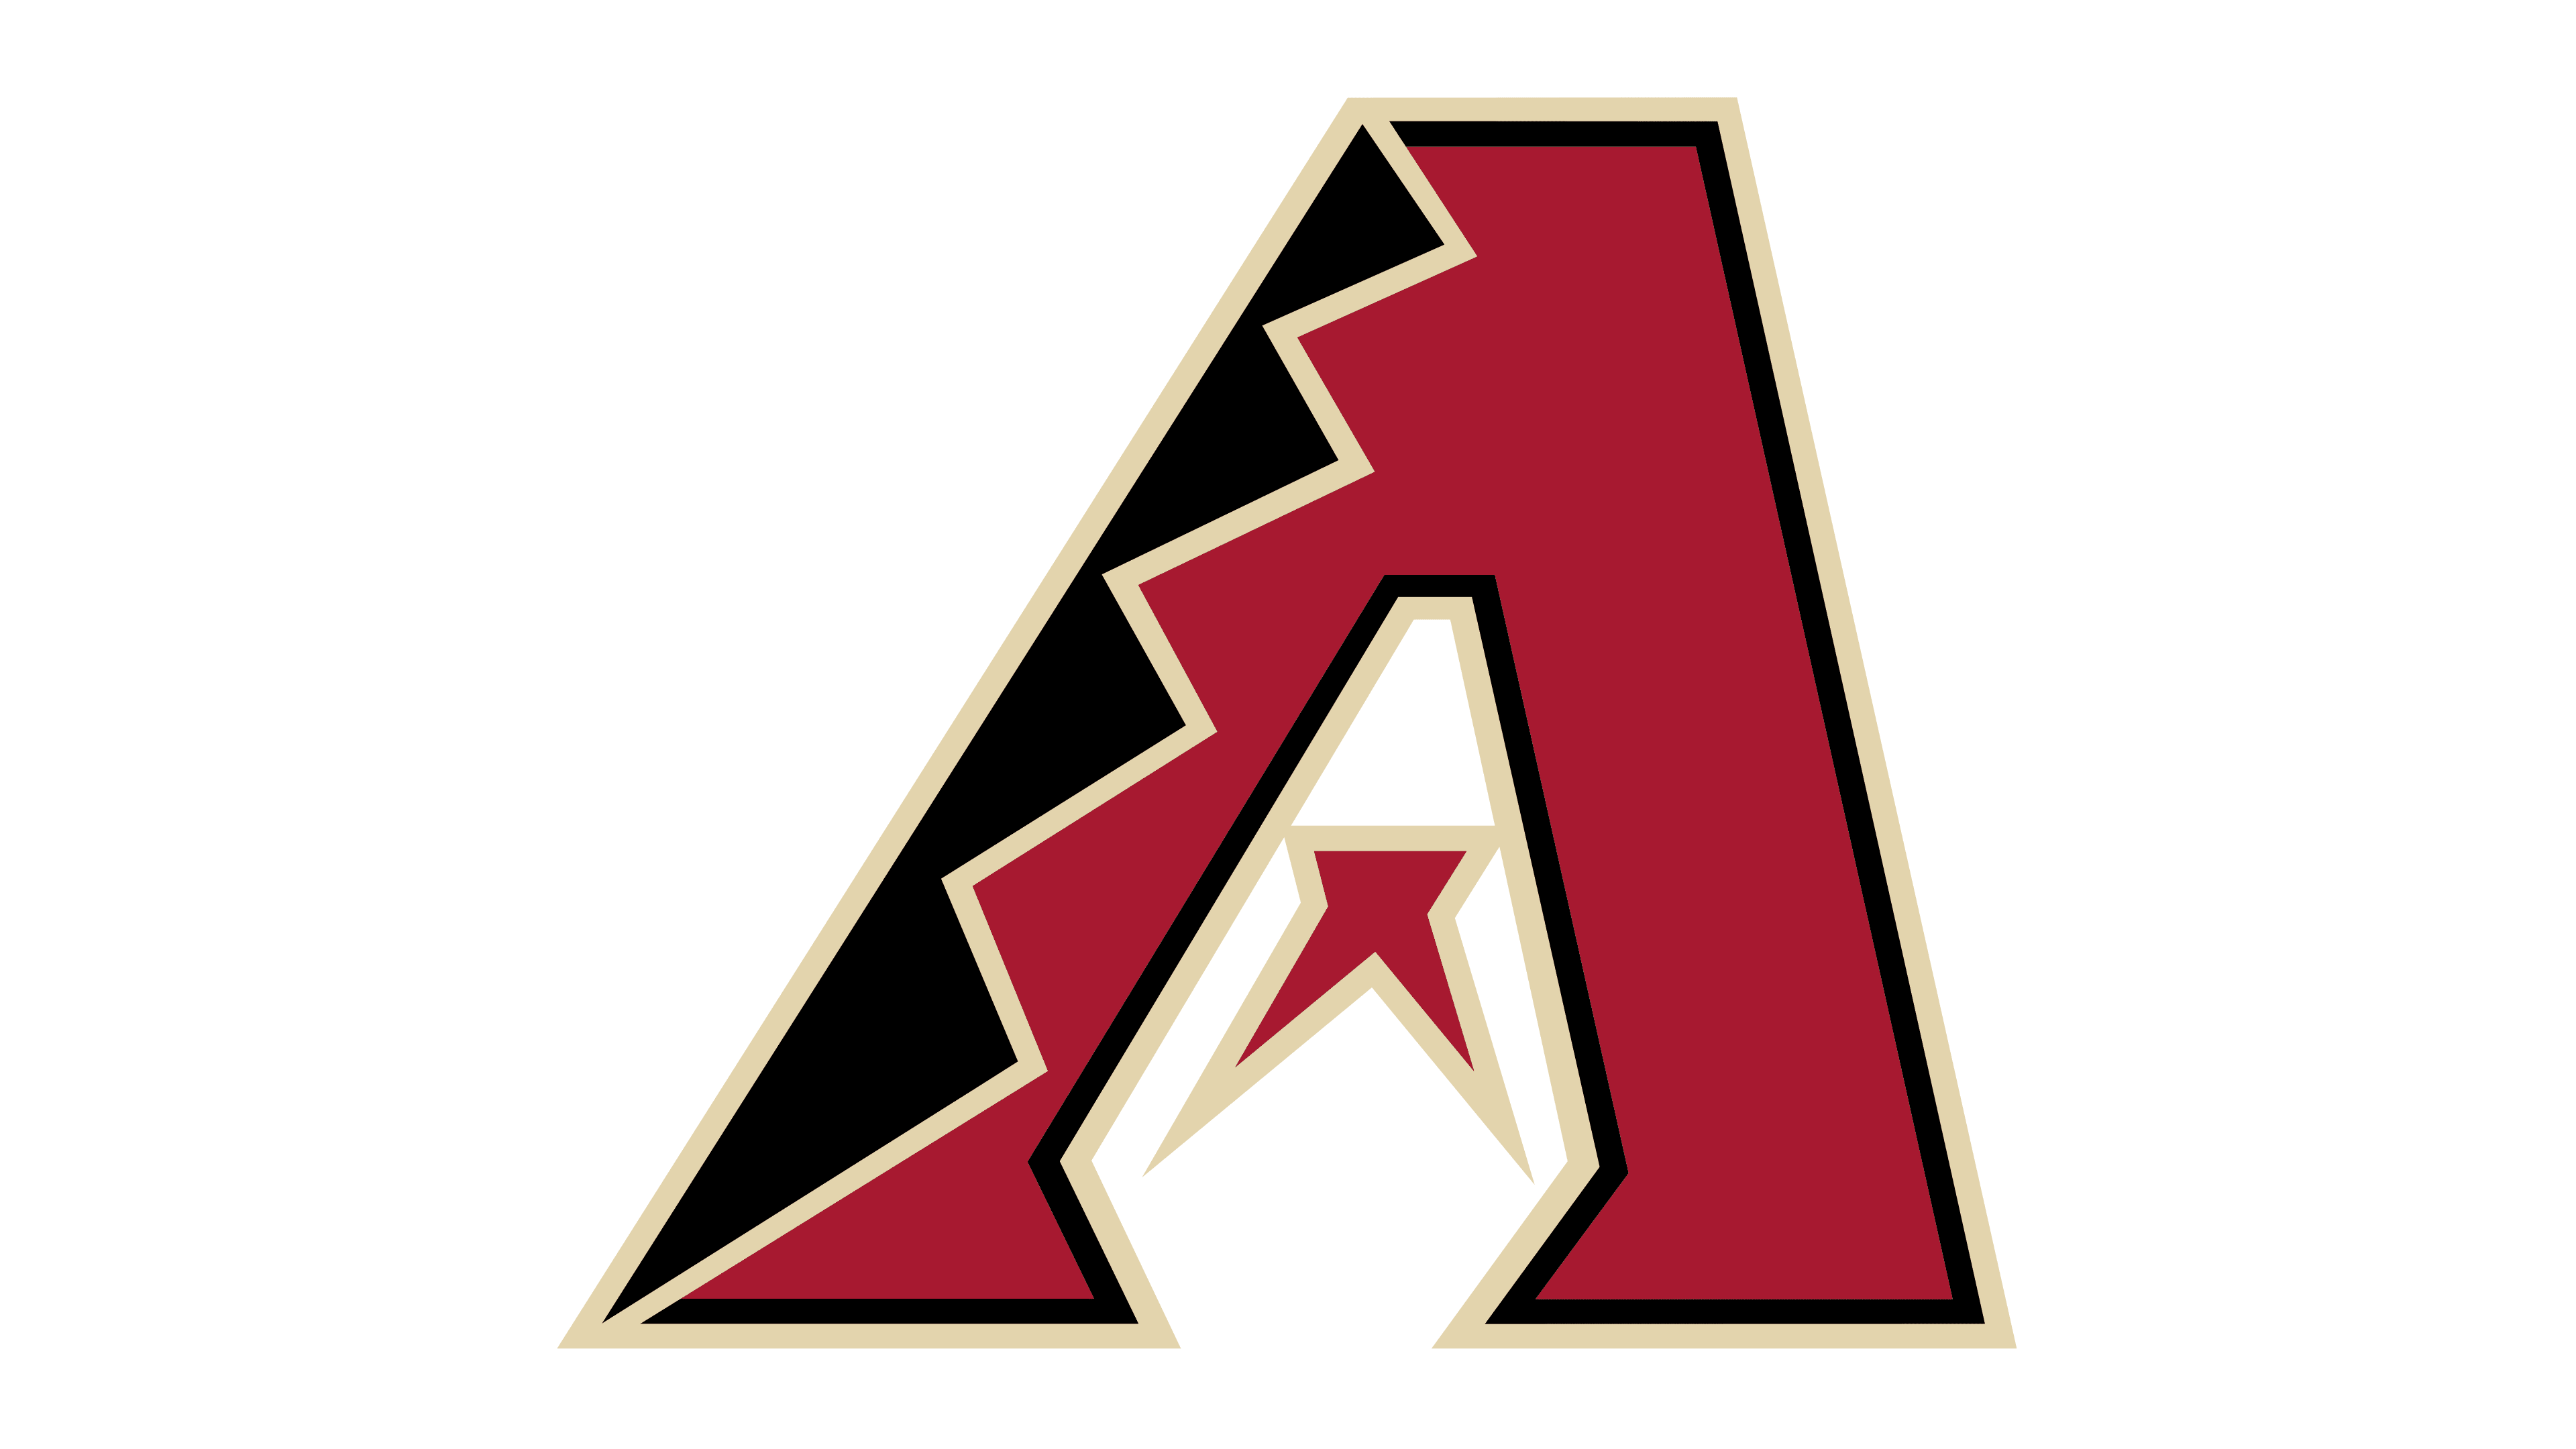 A Brand with Some Bite: The Story Behind the Arizona Diamondbacks